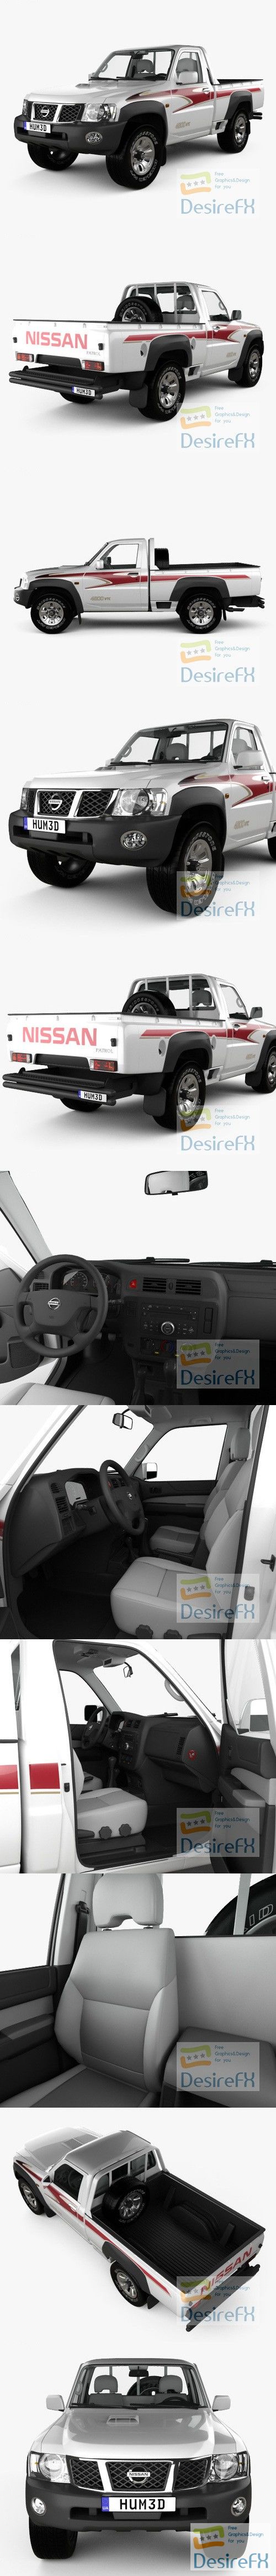 Nissan Patrol pickup with HQ interior 2016 3D Model